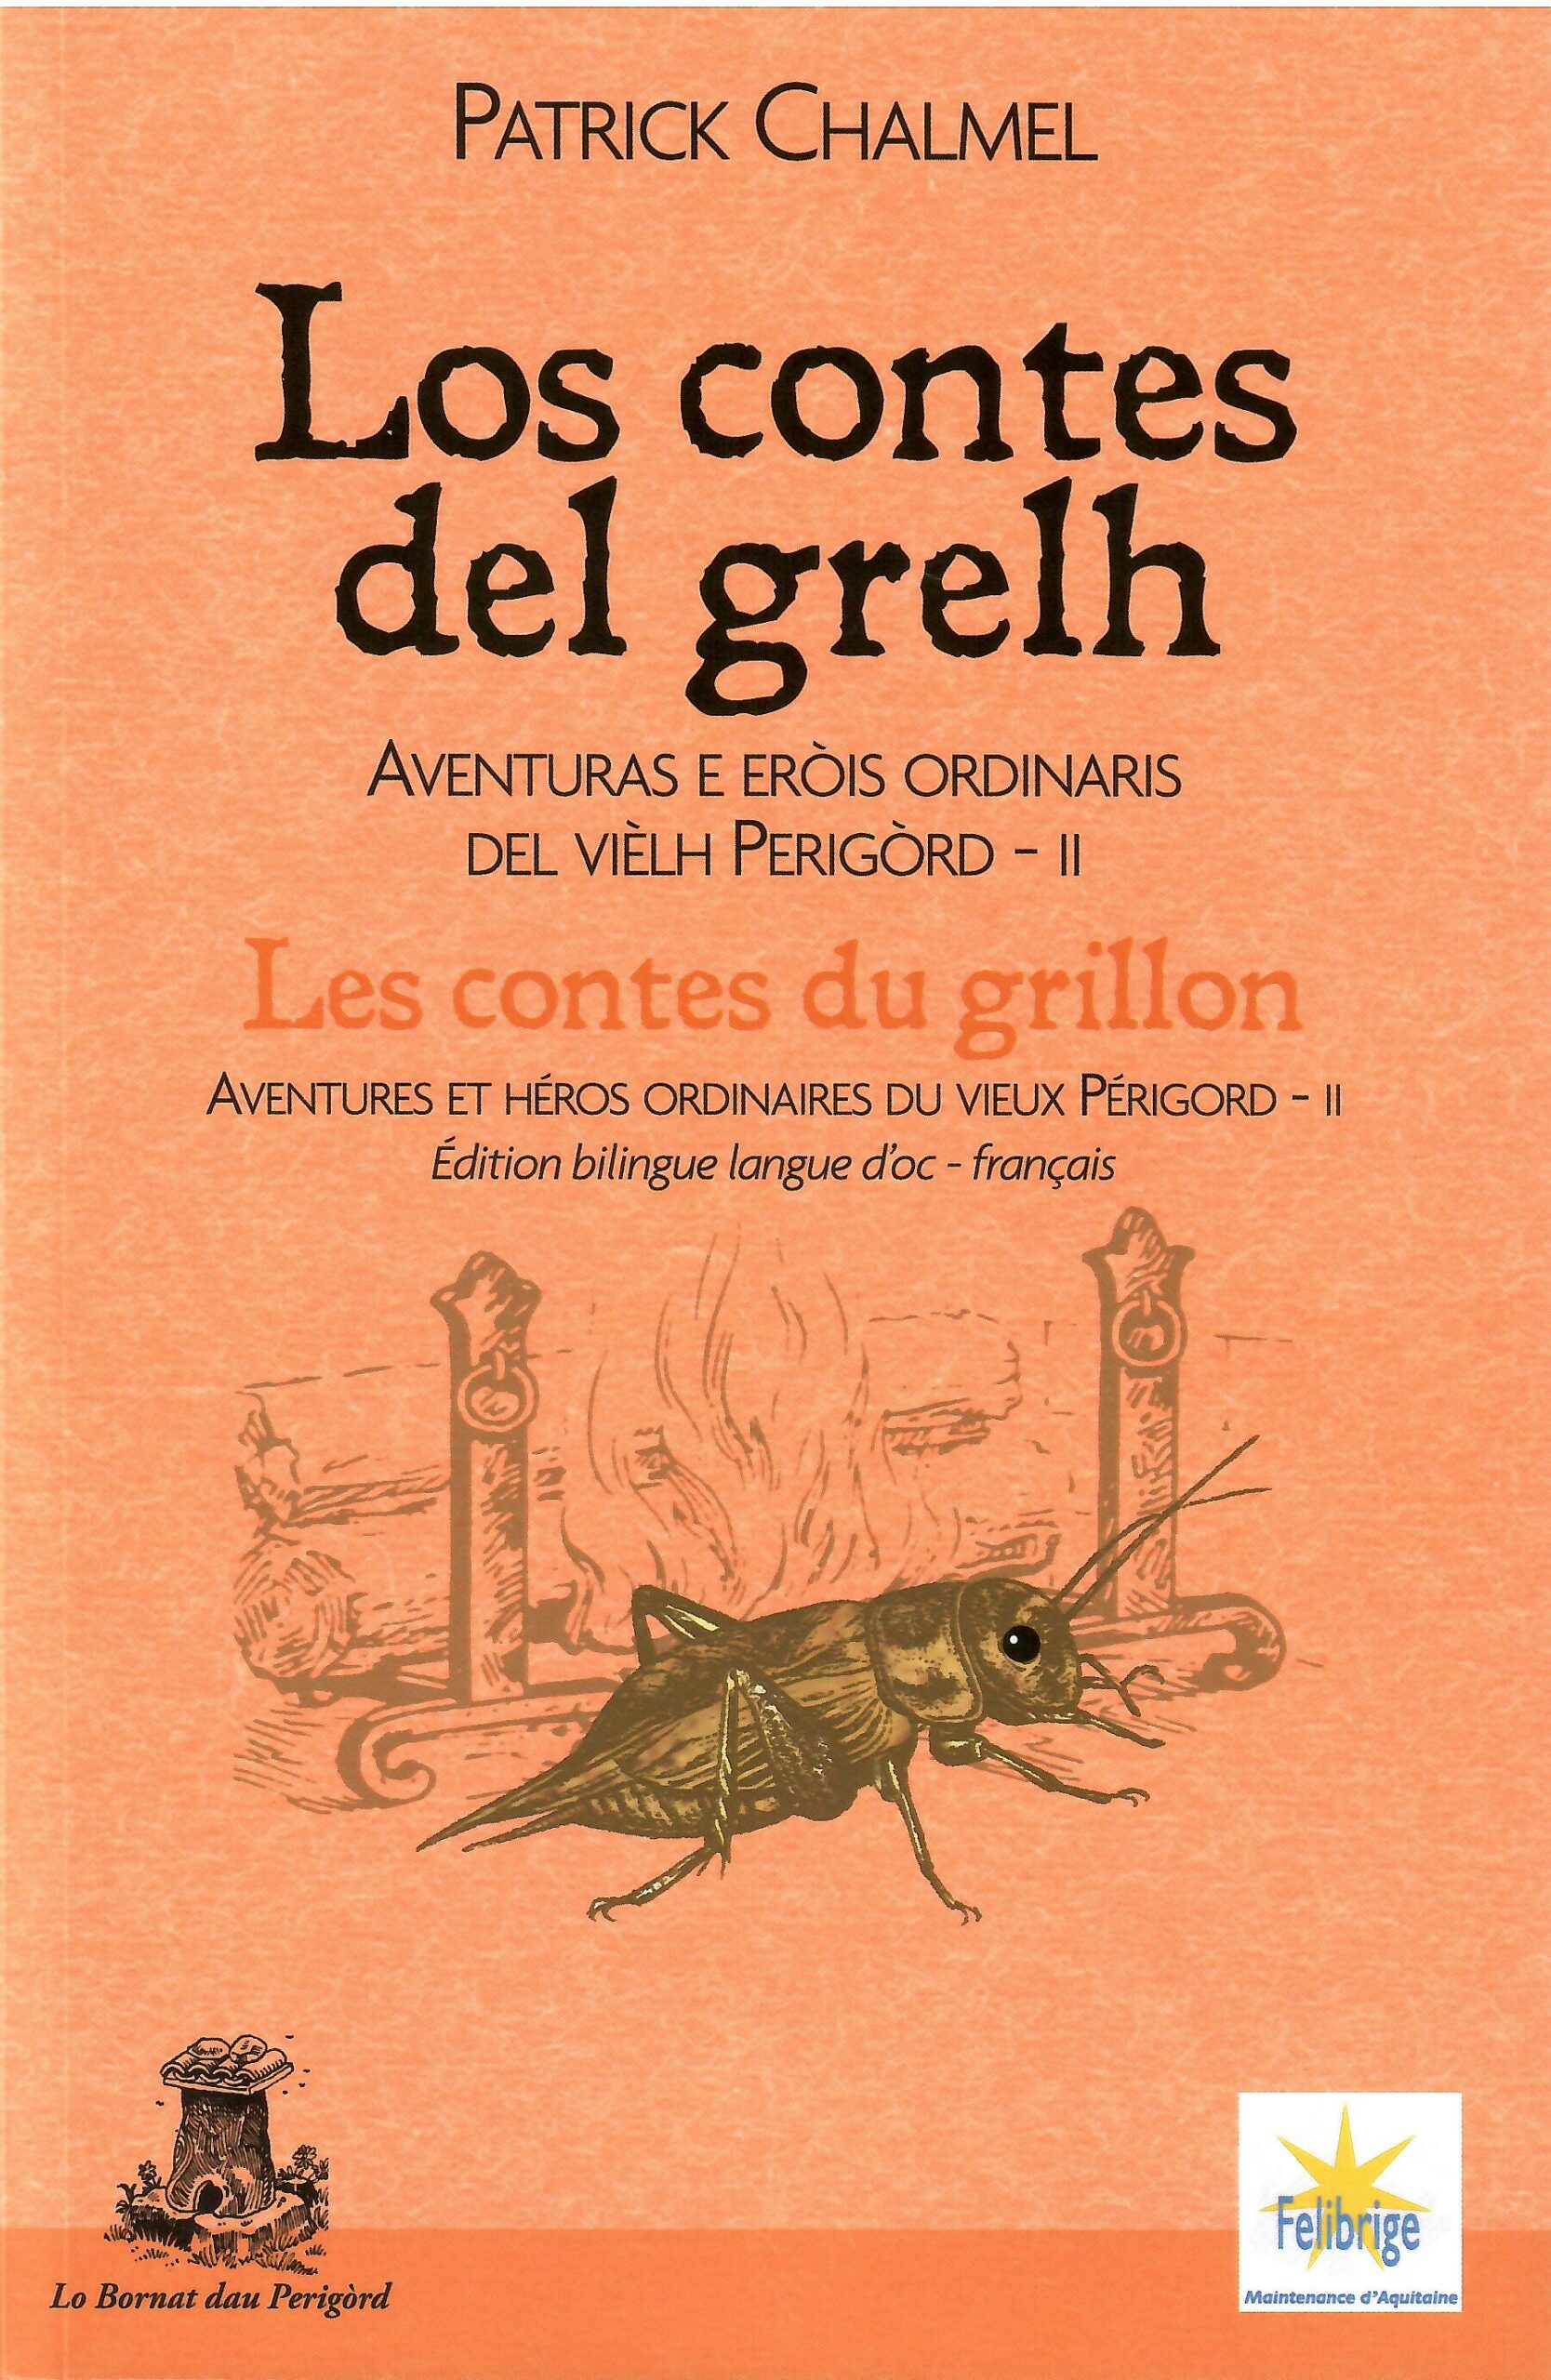 Couverture de Los contes del grelh – Les contes du grillon